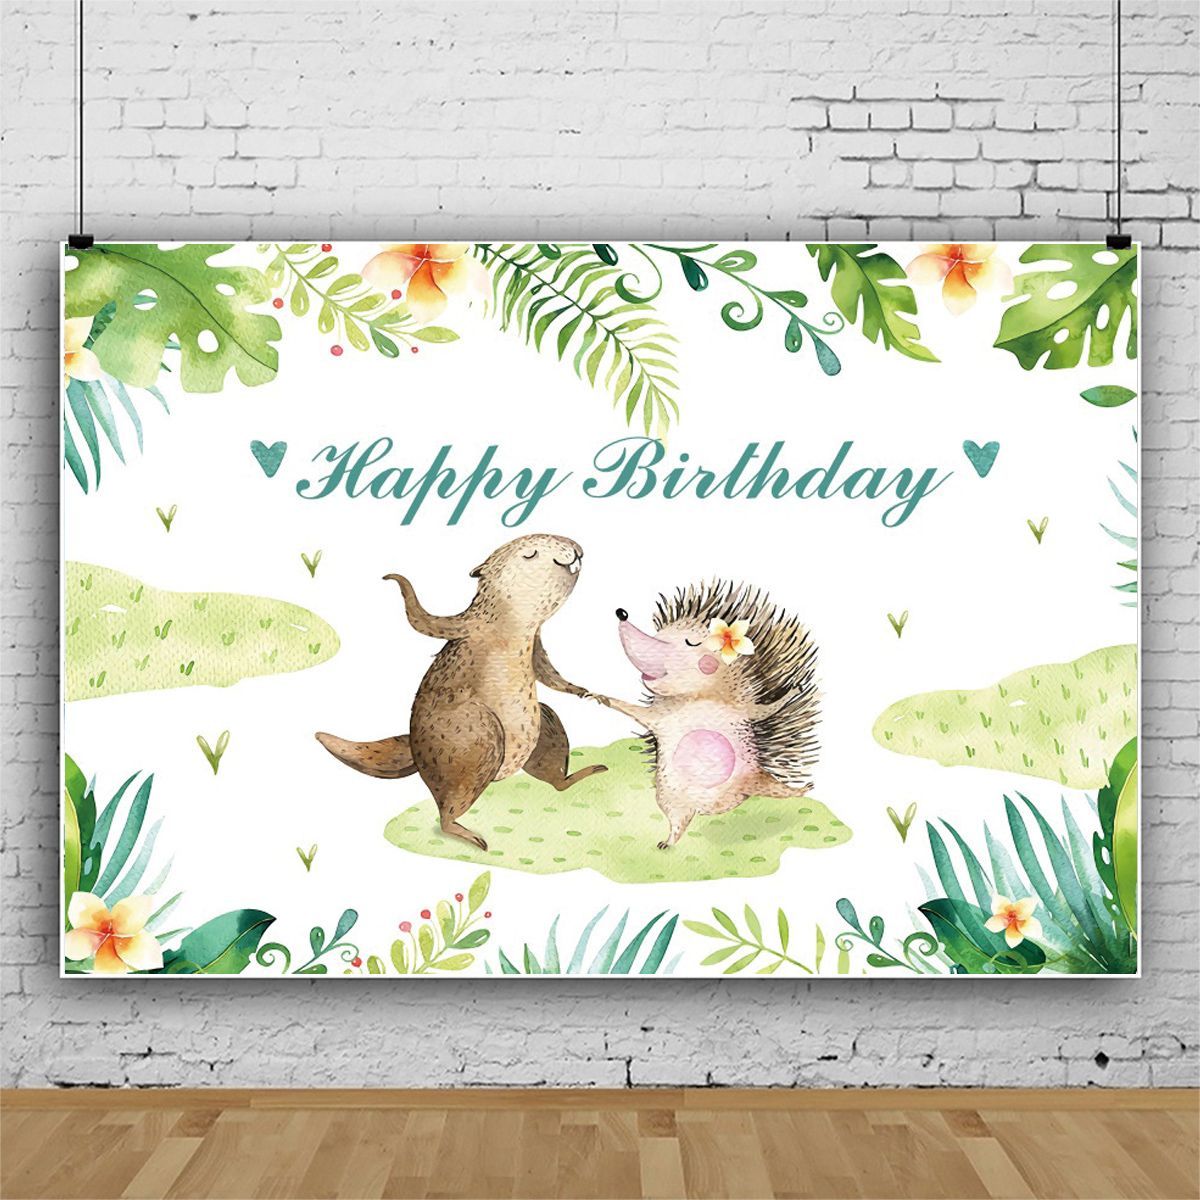 Animal-Children-Birthday-Photo-Wall-Hanging-Cloth-Photography-Background-Cloth-Photo-Studio-Props-Ba-1748899